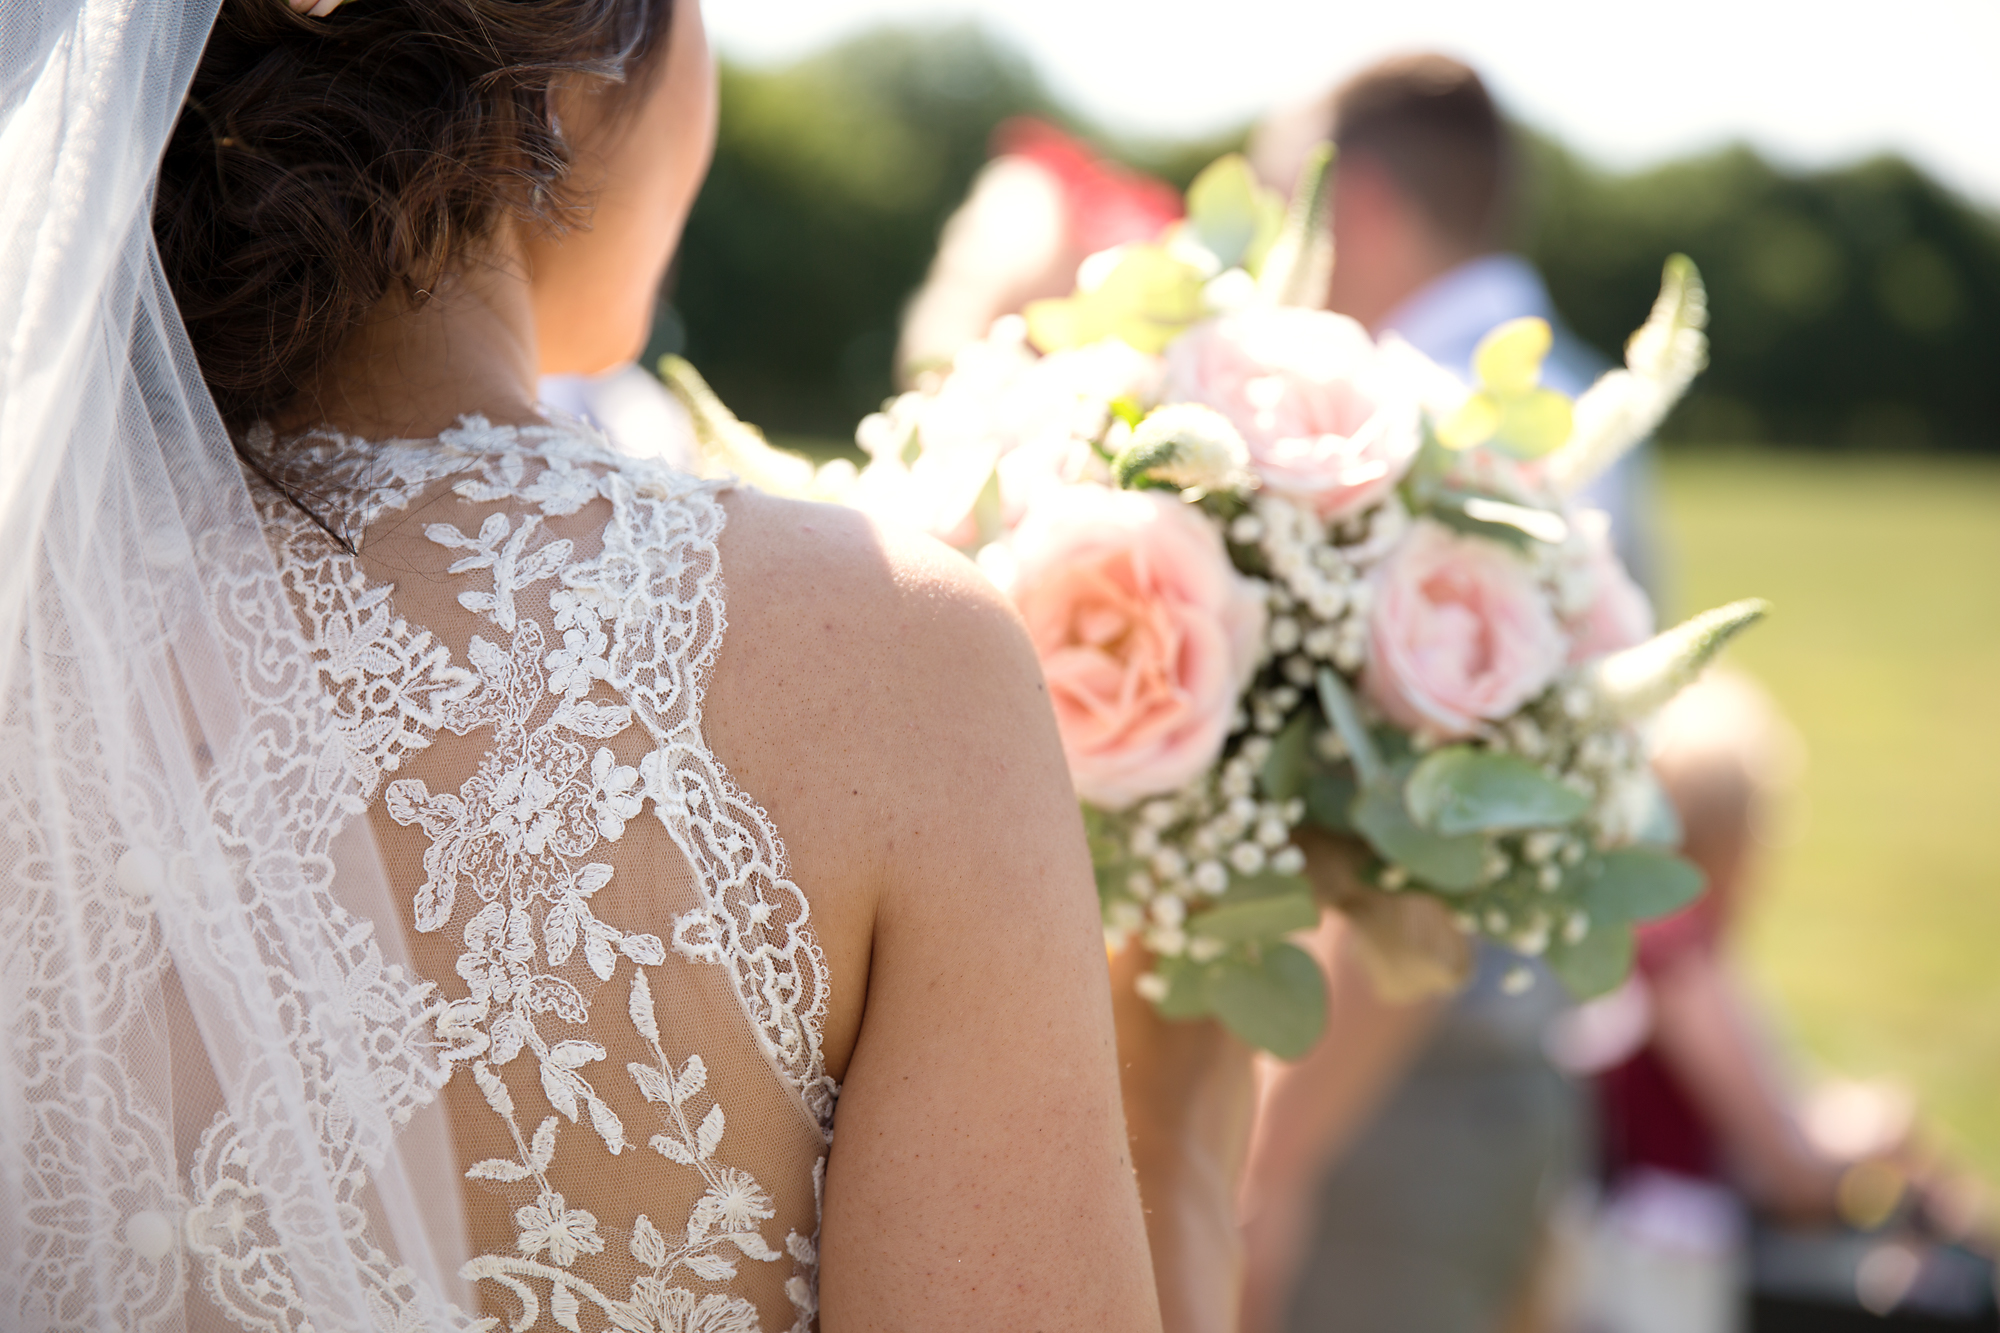 Lace wedding dress, wedding flowers, wedding details, wedding photography